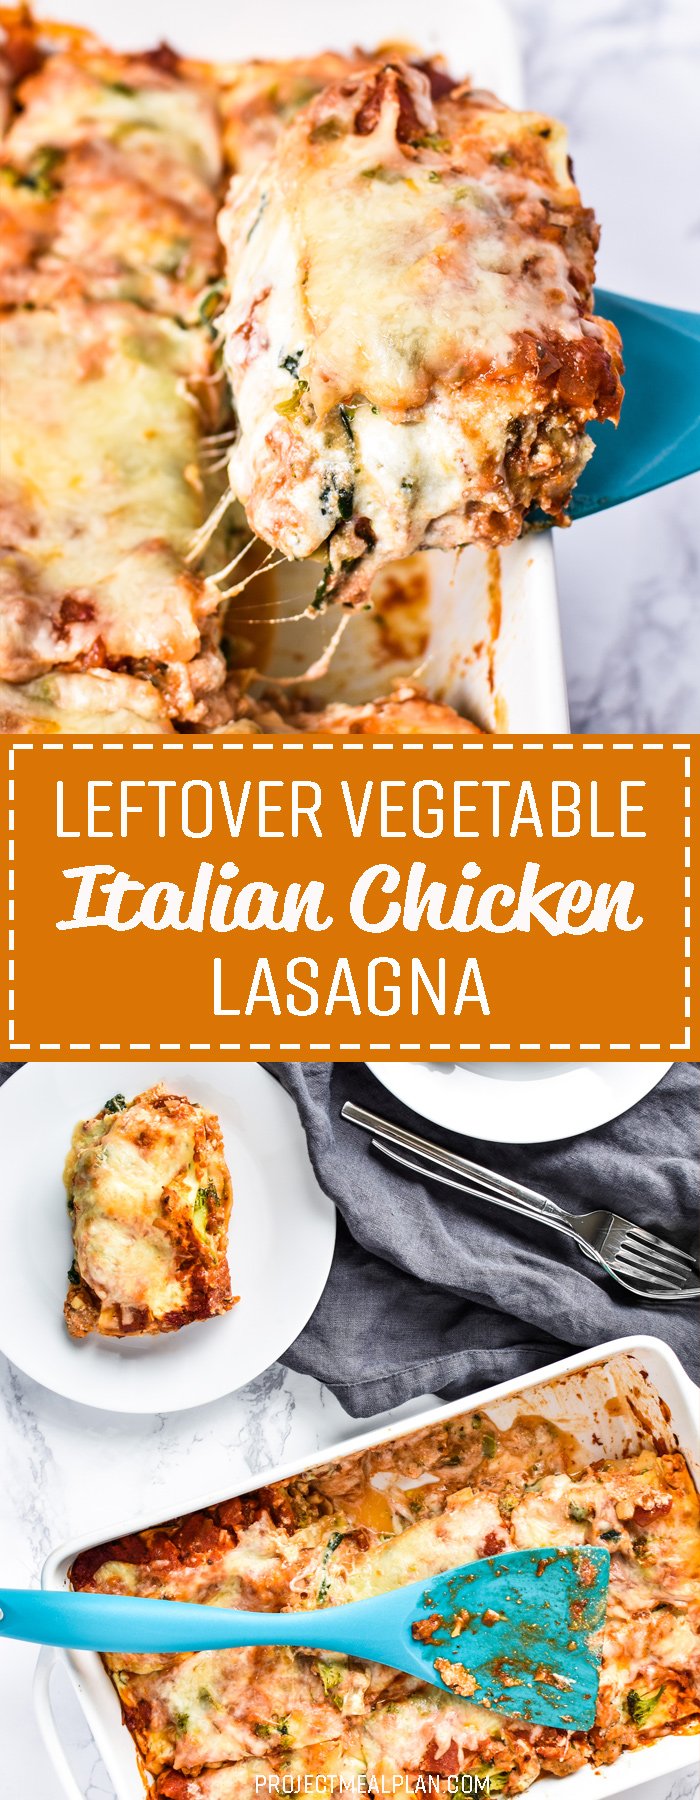 Leftover Vegetable Italian Chicken Lasagna Recipe - Use up leftover veggies in my favorite deliciously layered ground chicken lasagna! - ProjectMealPlan.com